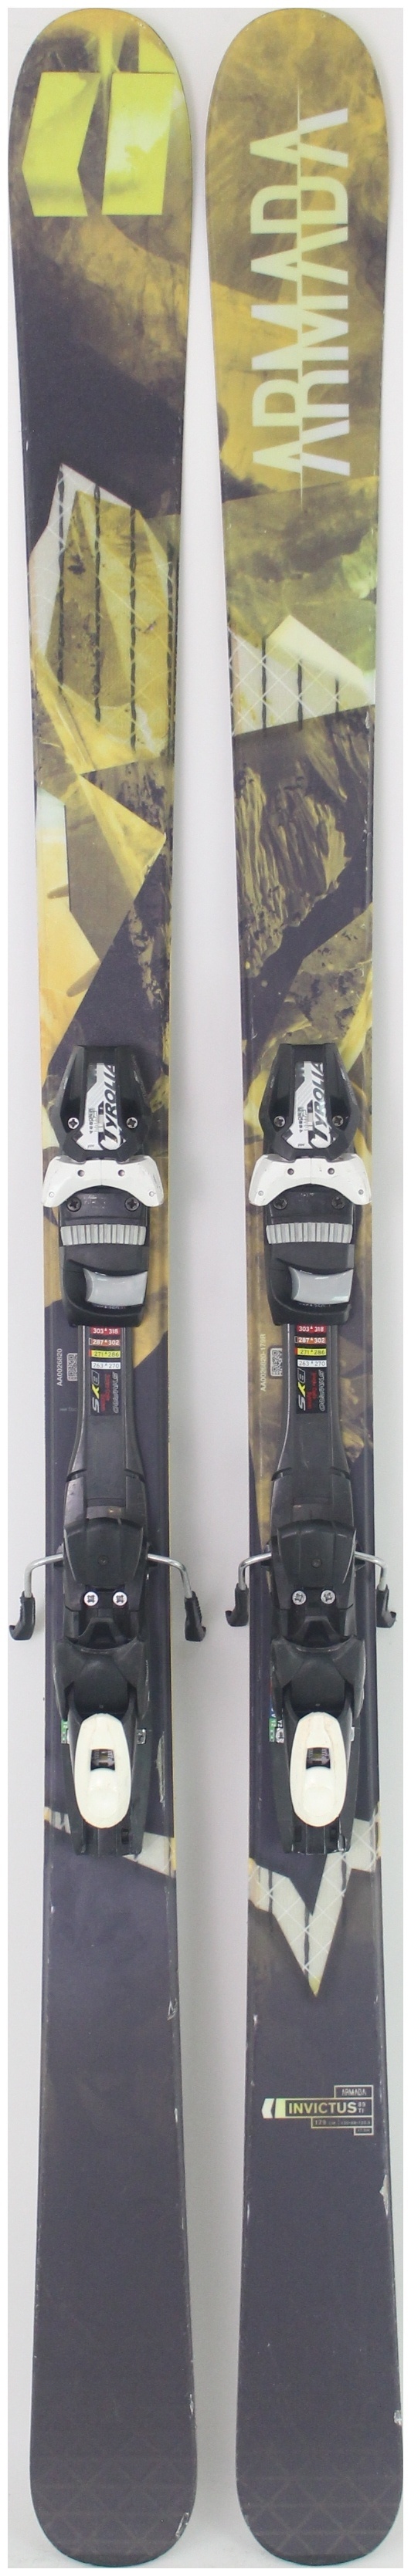 2018 Armada Invictus 89 Ti 179cm Used Demo Skis on Sale - Powder7